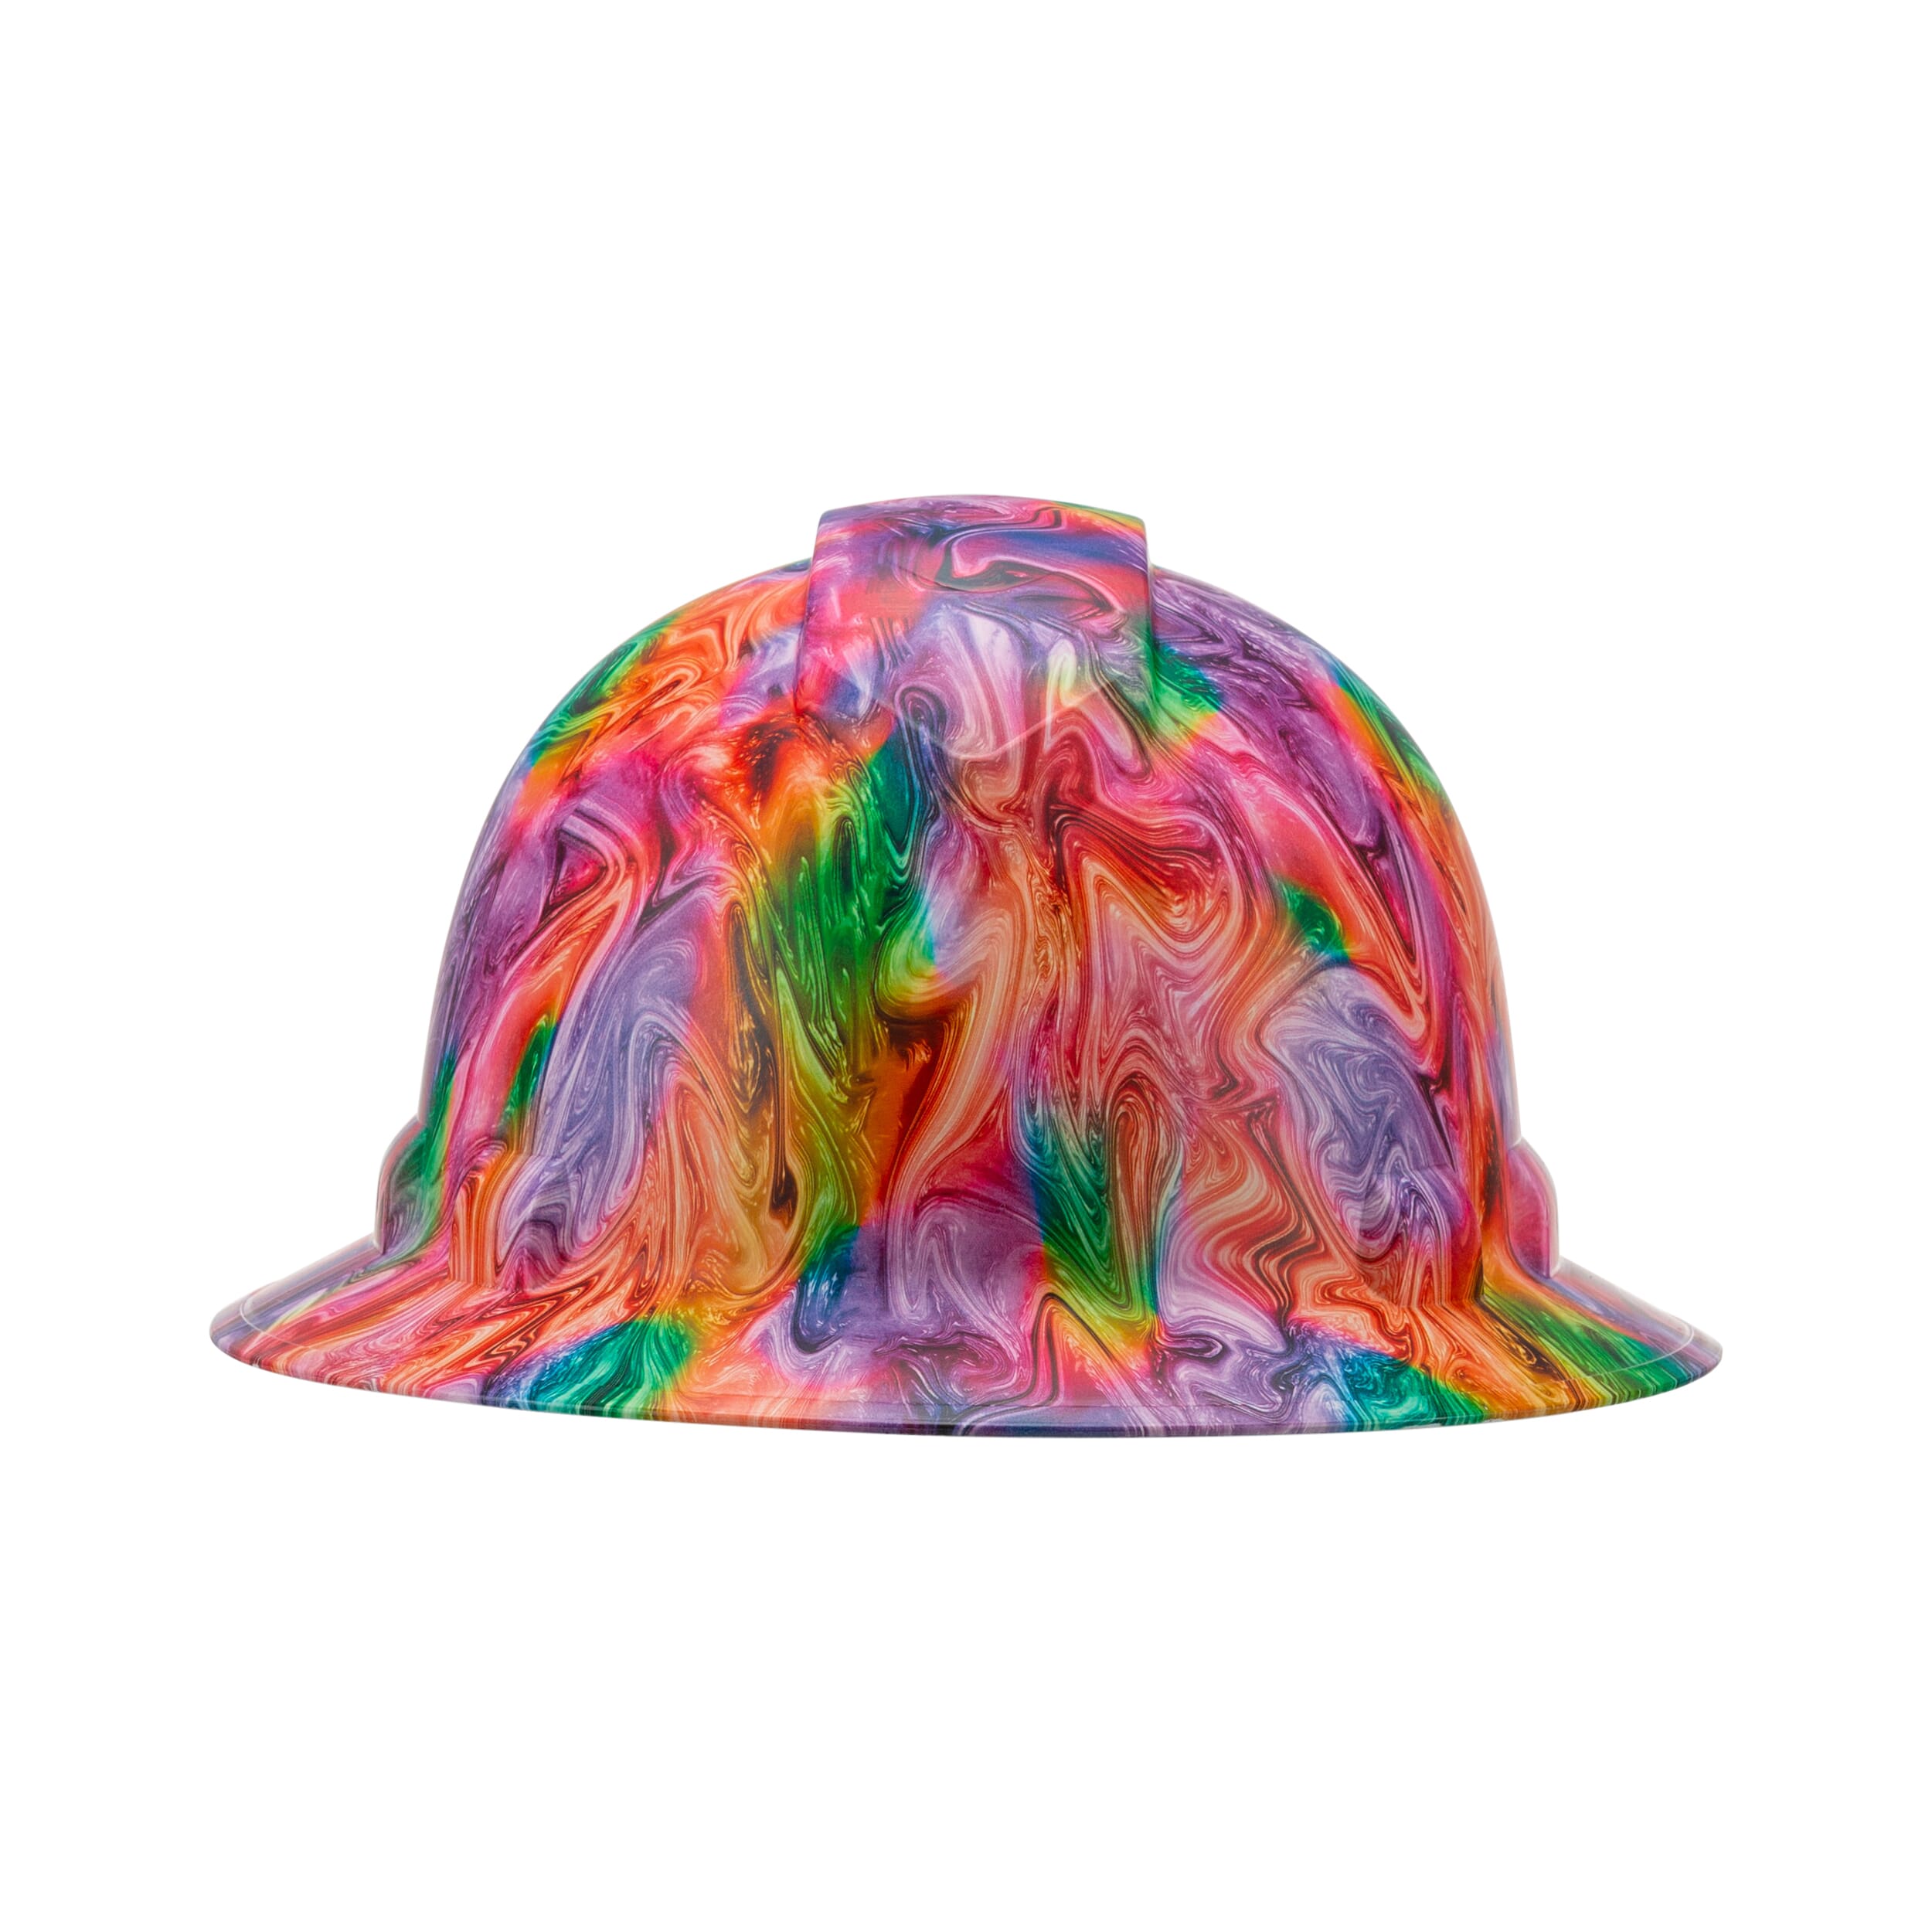 Full Brim Pyramex Hard Hat, Custom Hard Candy Design, Safety Helmet, 6 Point